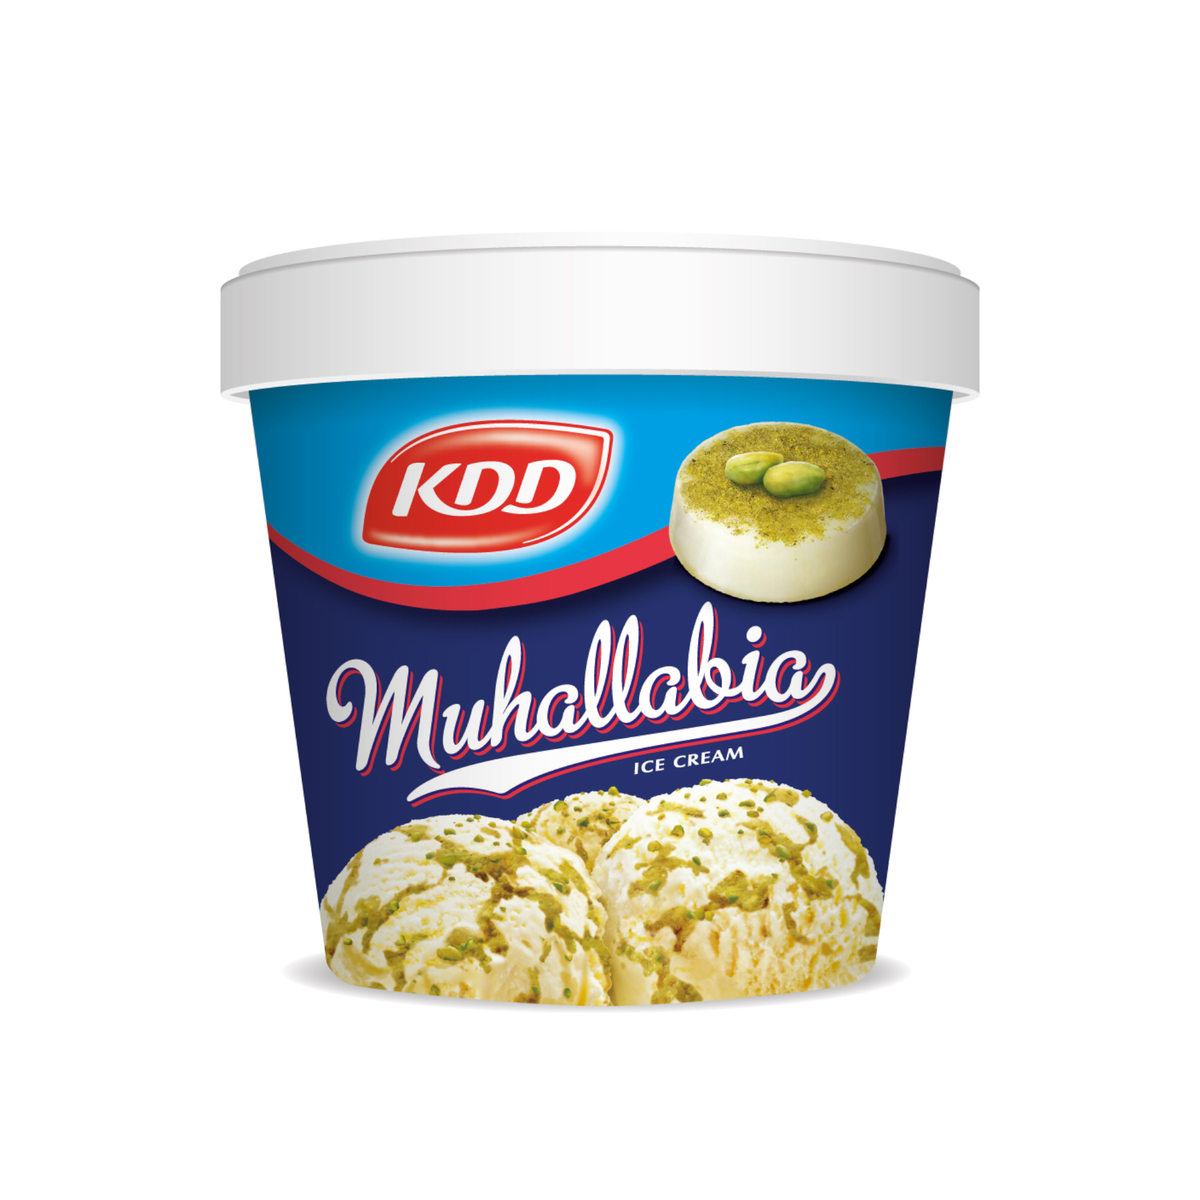 KDD Muhallabia Ice Cream 500ml